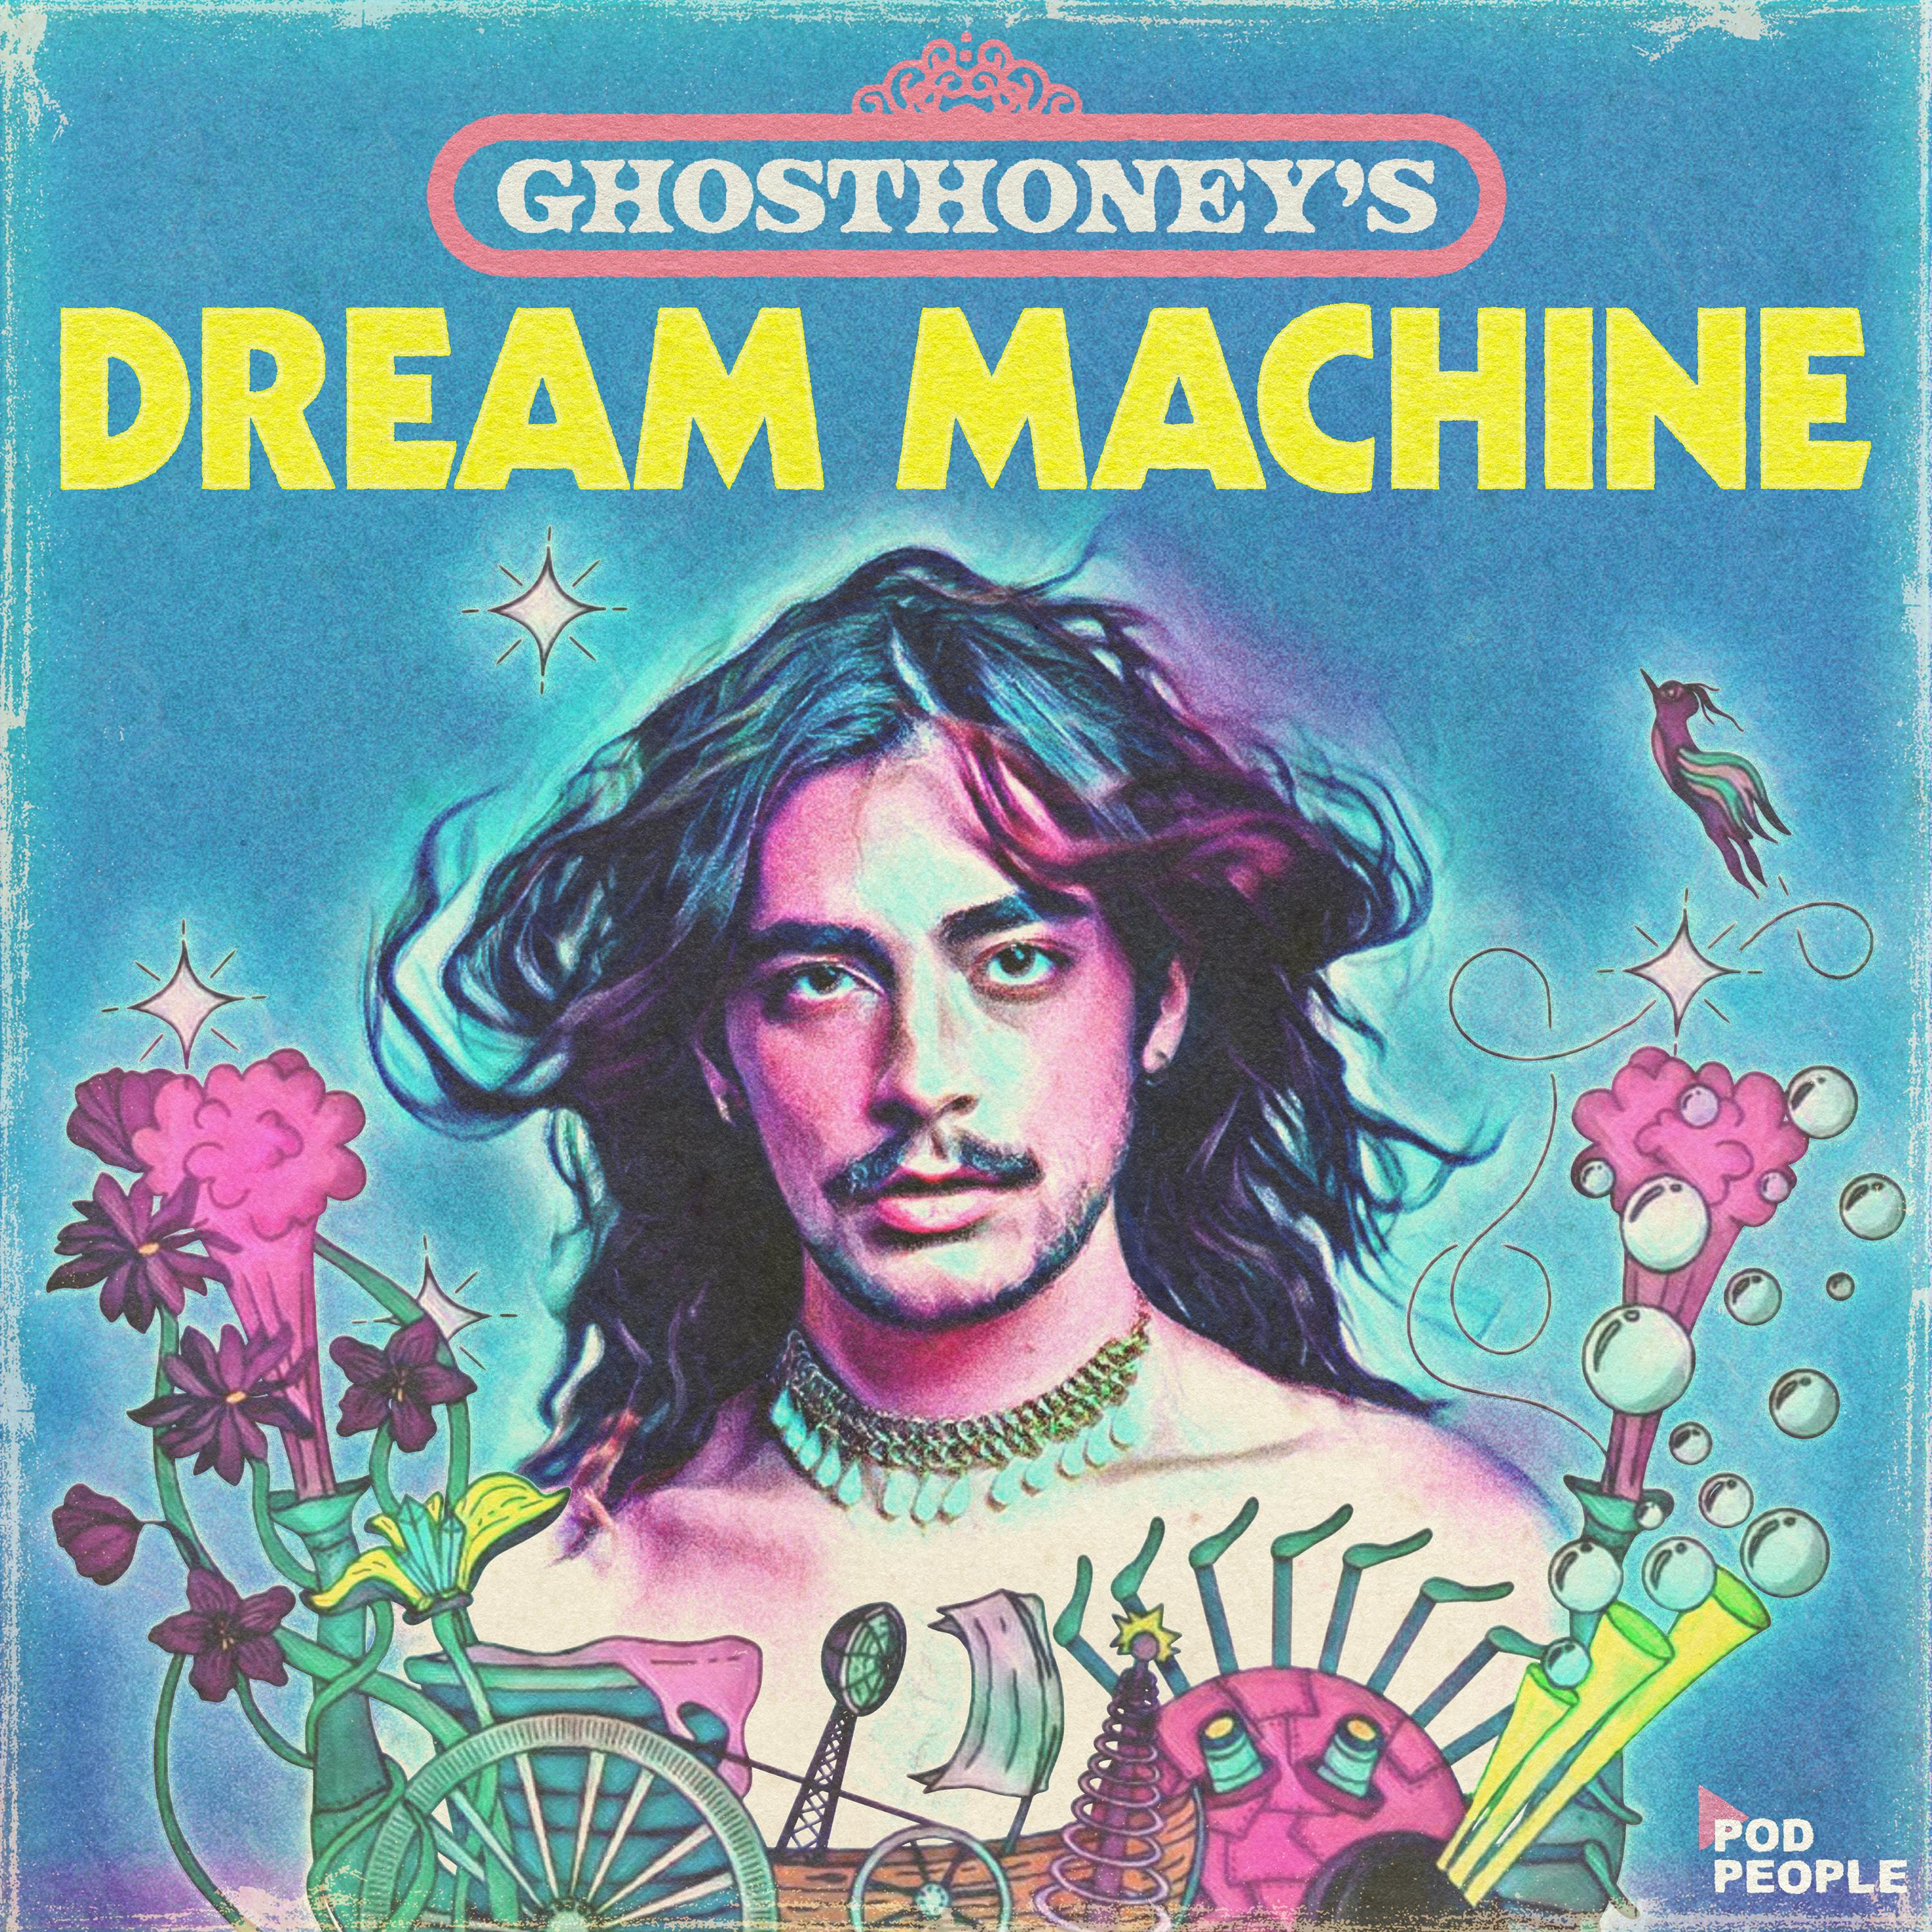 Ghosthoney’s Dream Machine podcast show image